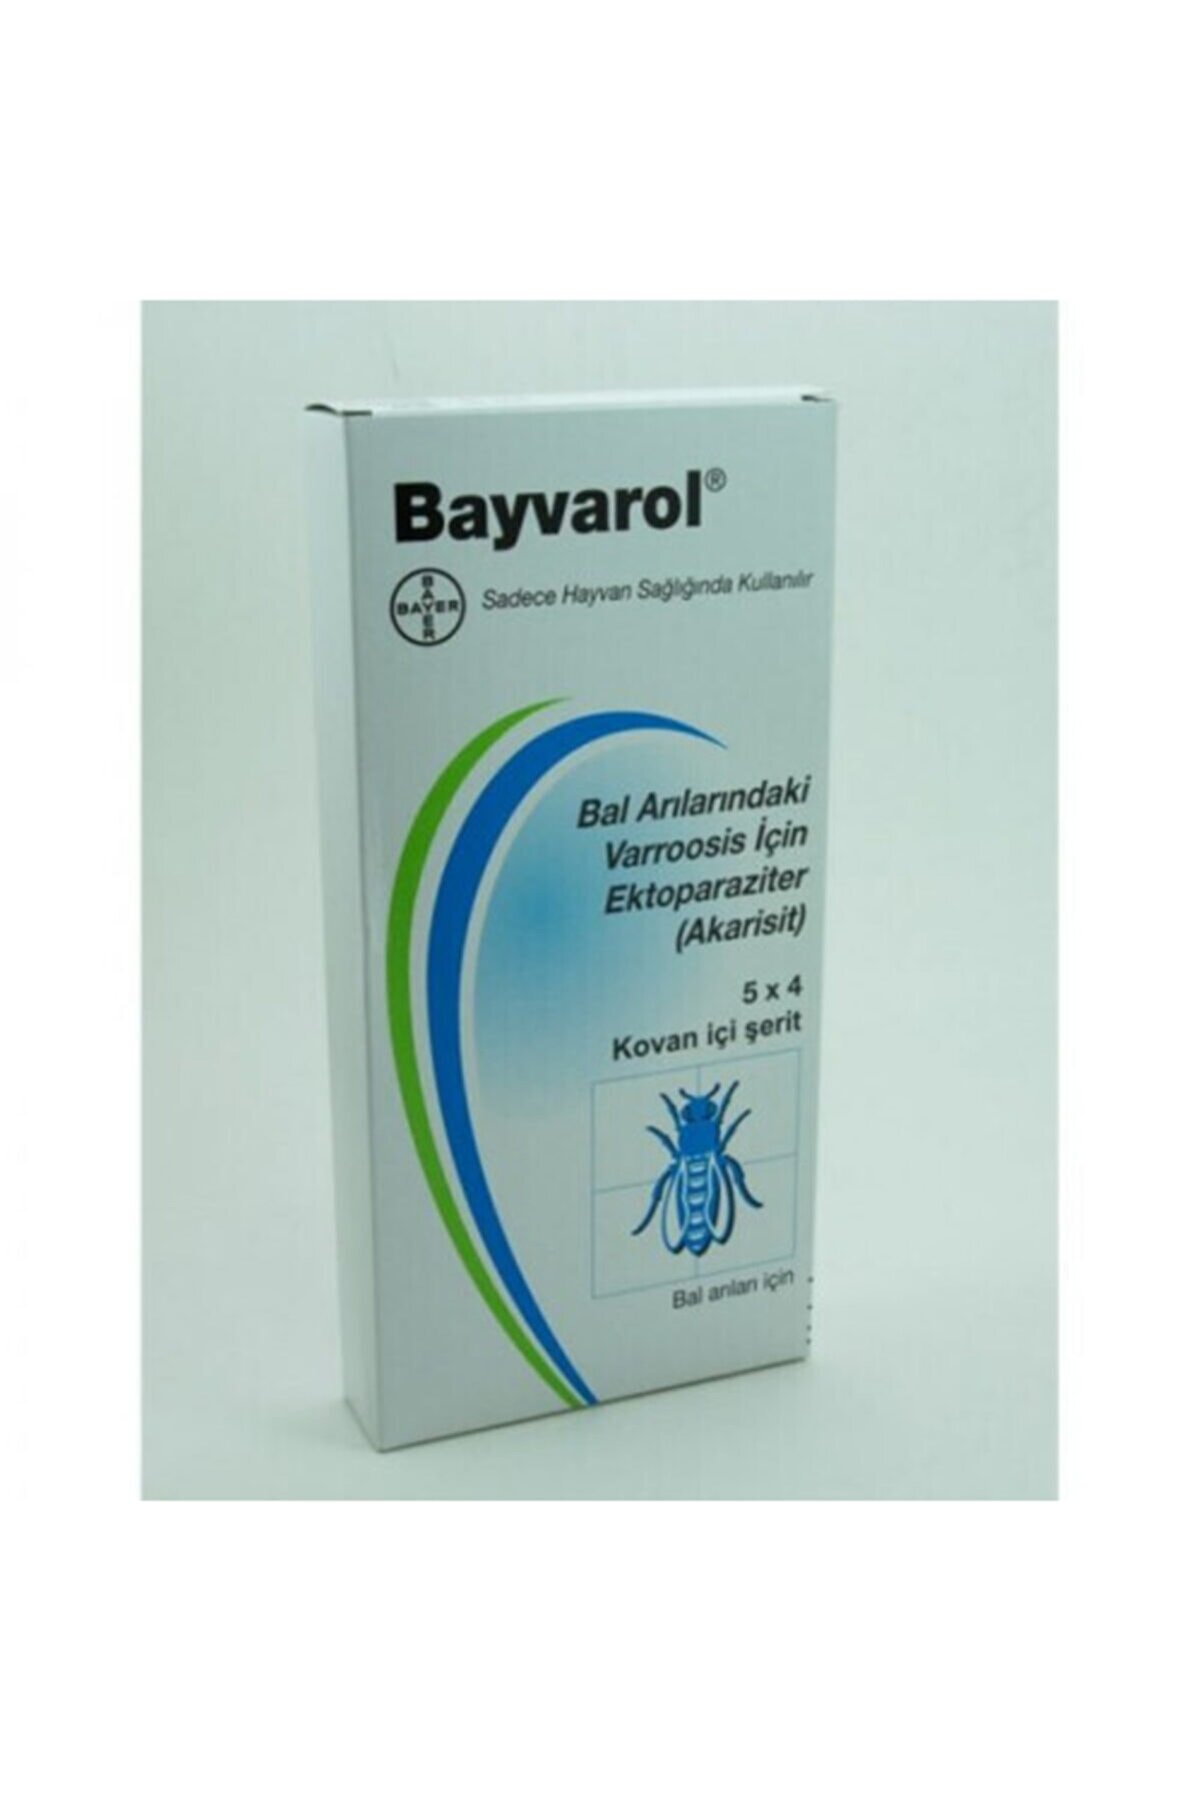 Bayer Bayvarol